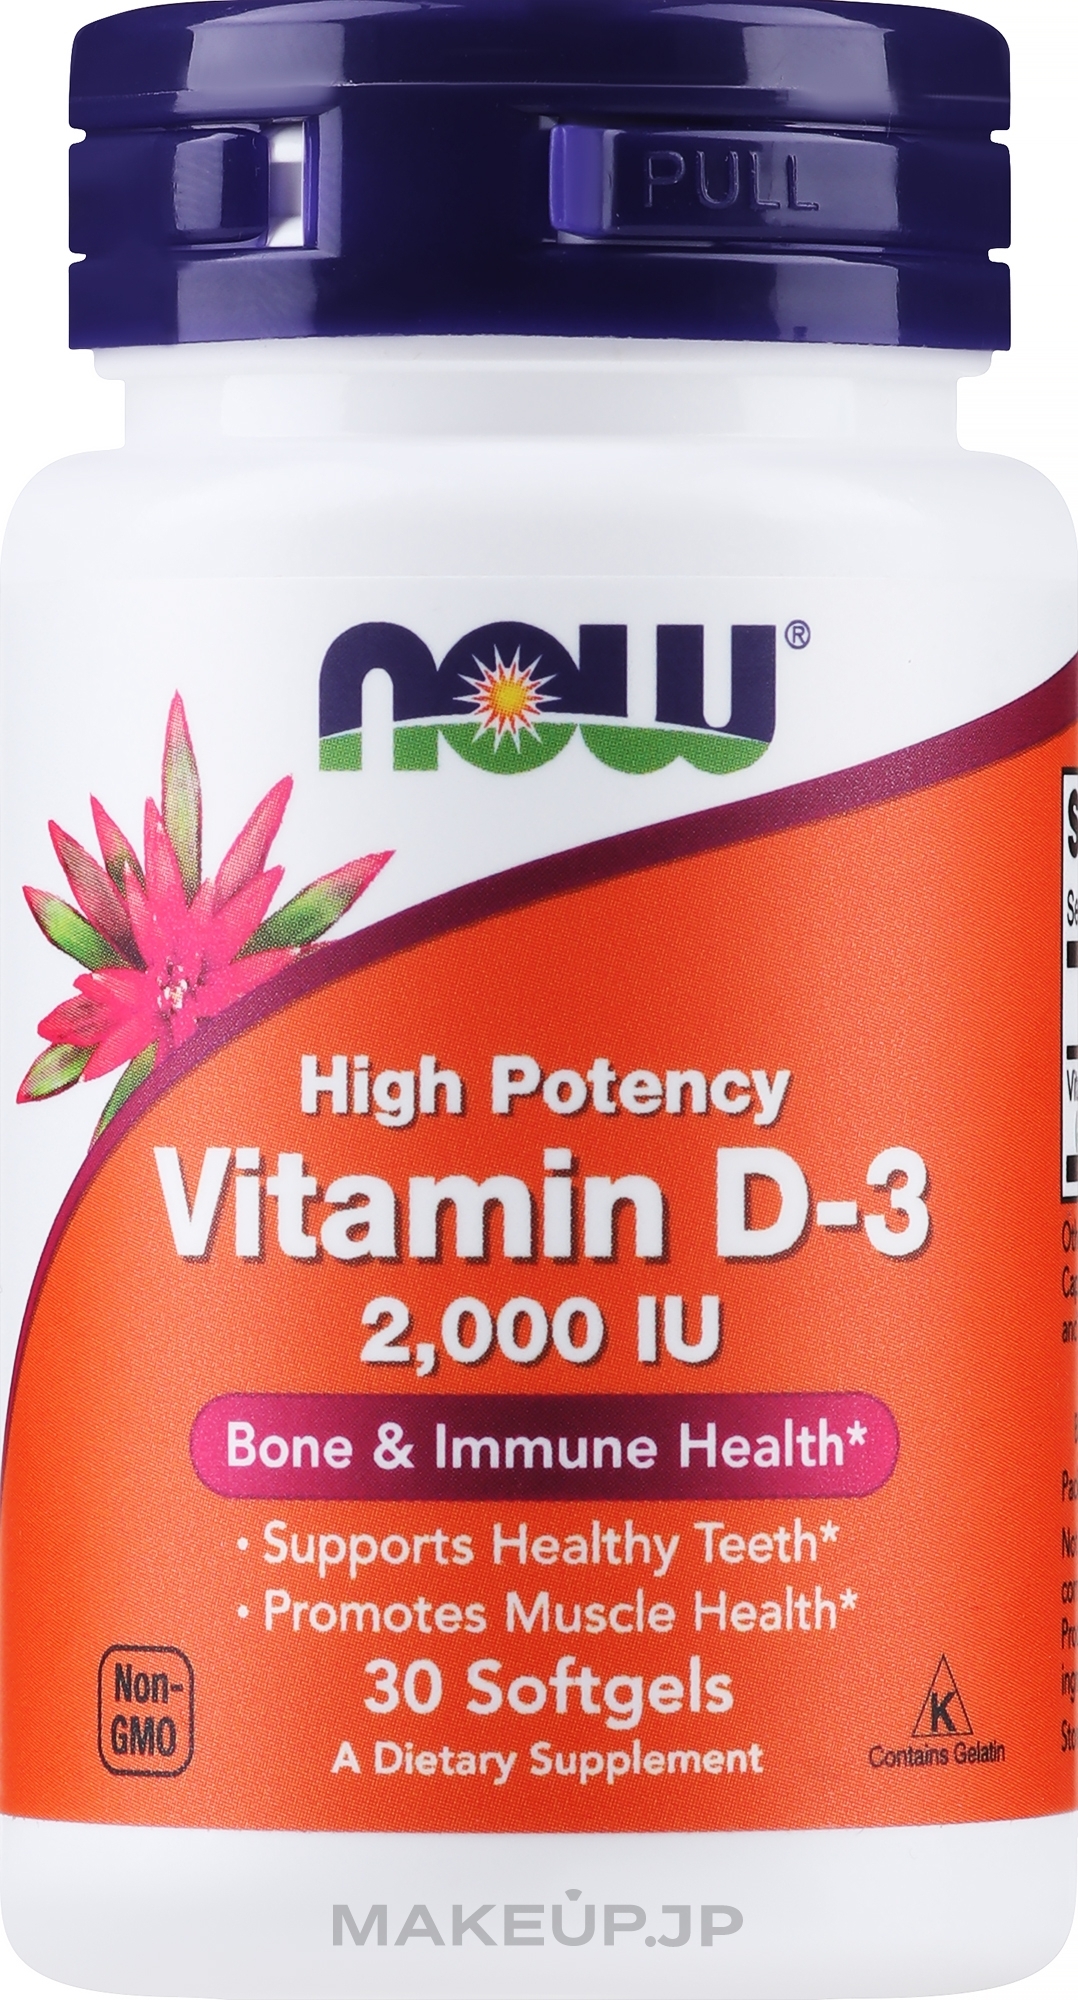 High Potency Vitamin D-3 - Now Foods Vitamin D-3 High Potency 2000 IU Softgels — photo 30 szt.